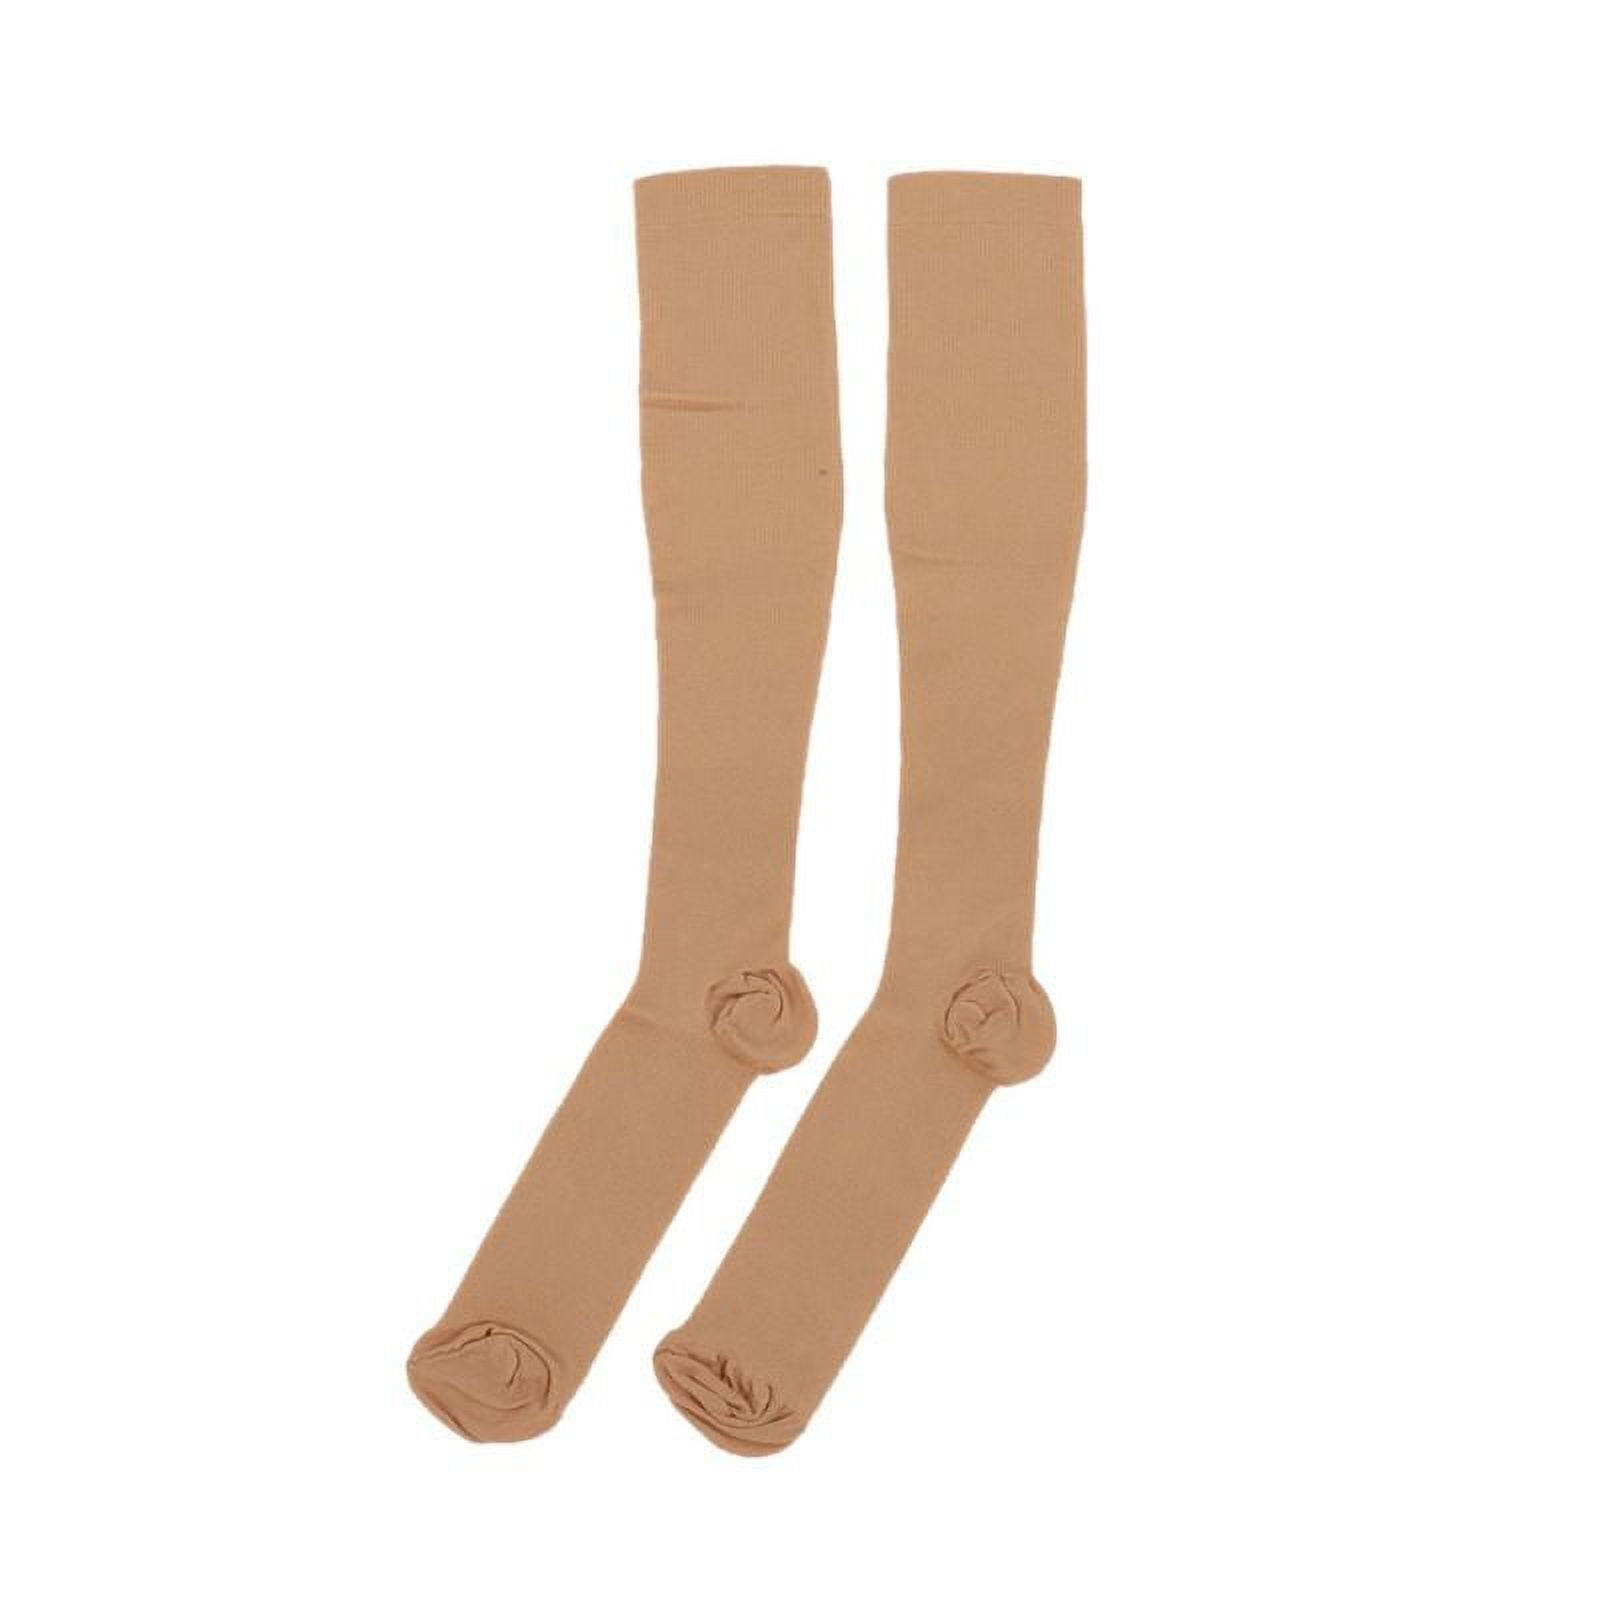 4 Pairs Black Knee High Graduated Compression Socks for Men & Women - BEST  Stockings for Running, Medical, Athletic, Diabetic, Swelling, Varicose Veins,  Travel, Pregnancy, Shin Splints, Nurse 